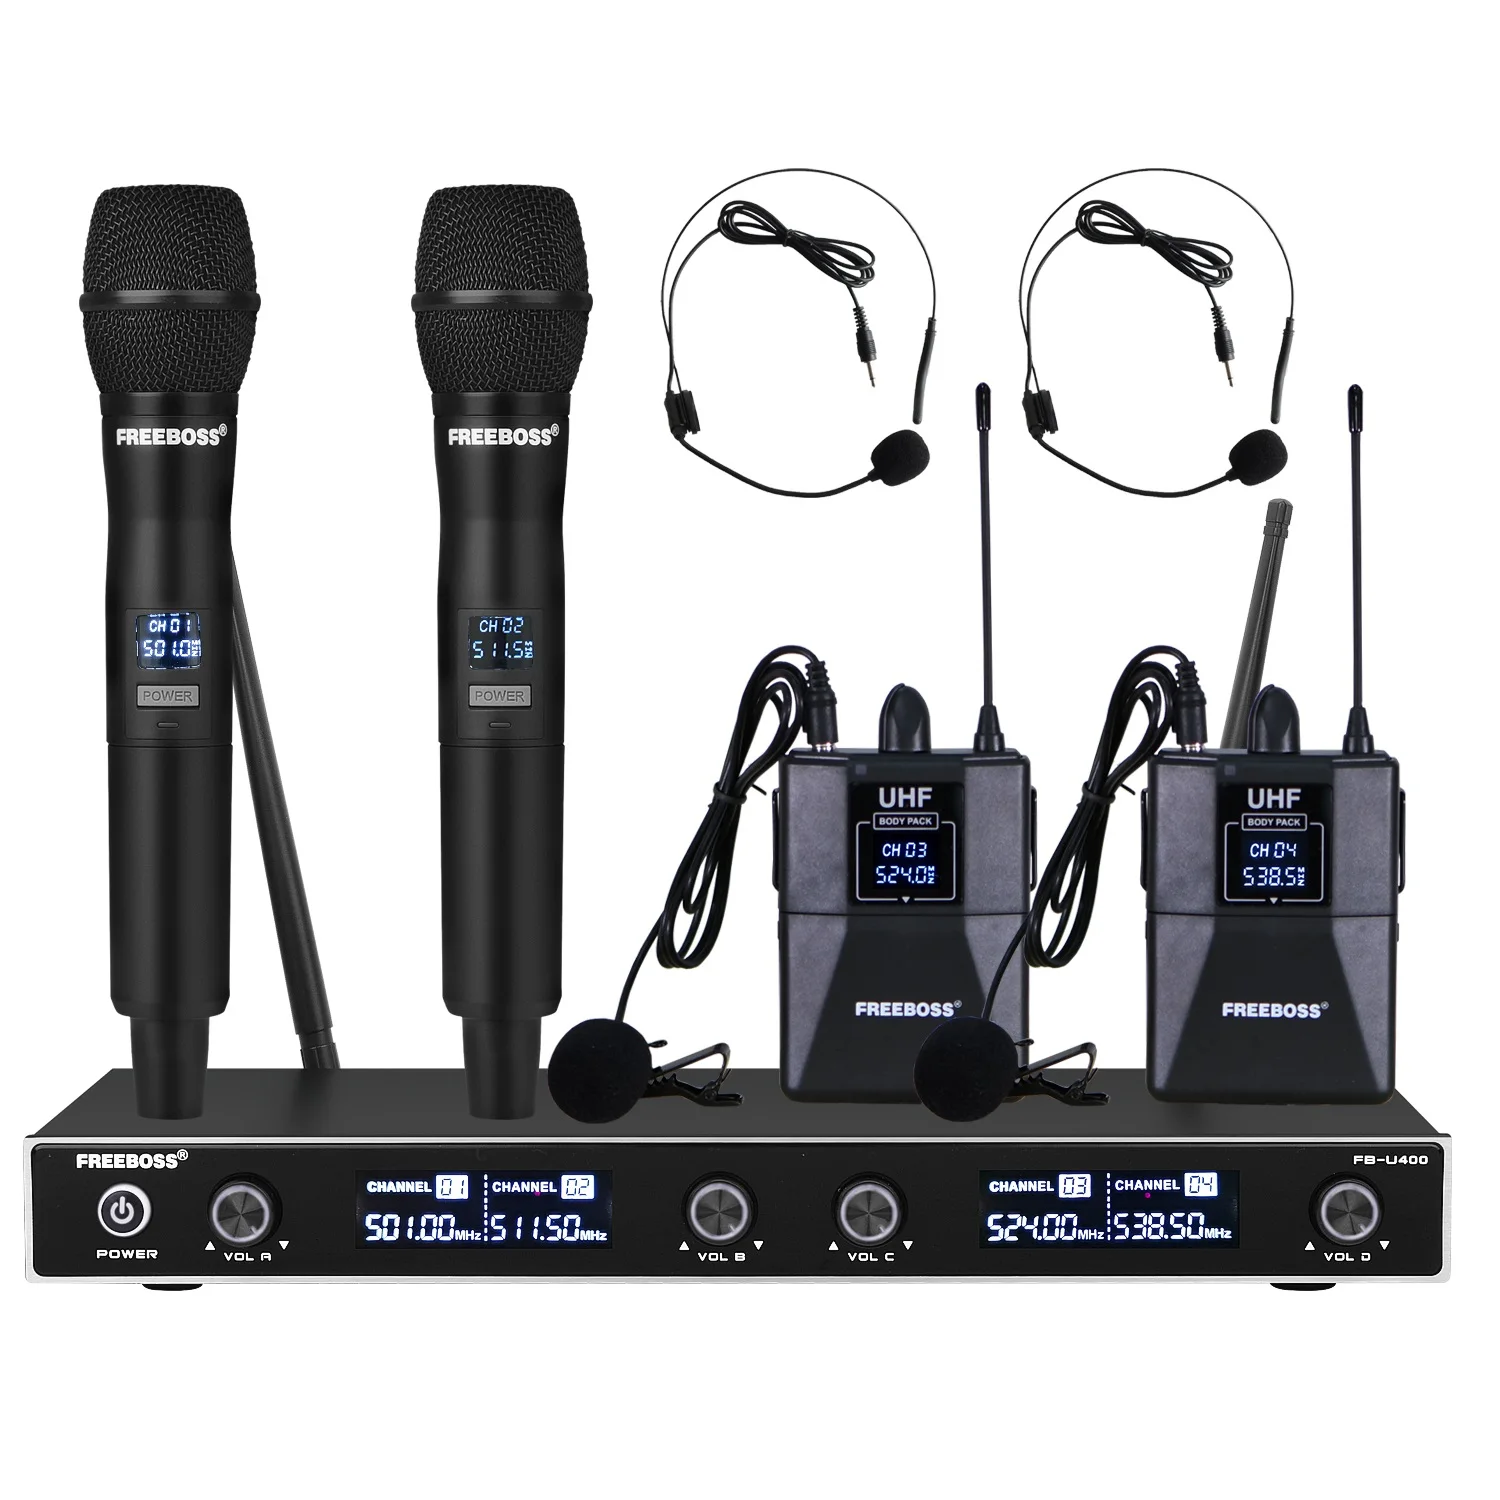 Wireless Microphone 4 Channel | Wireless Microphone System - Fb-u400h2 ...